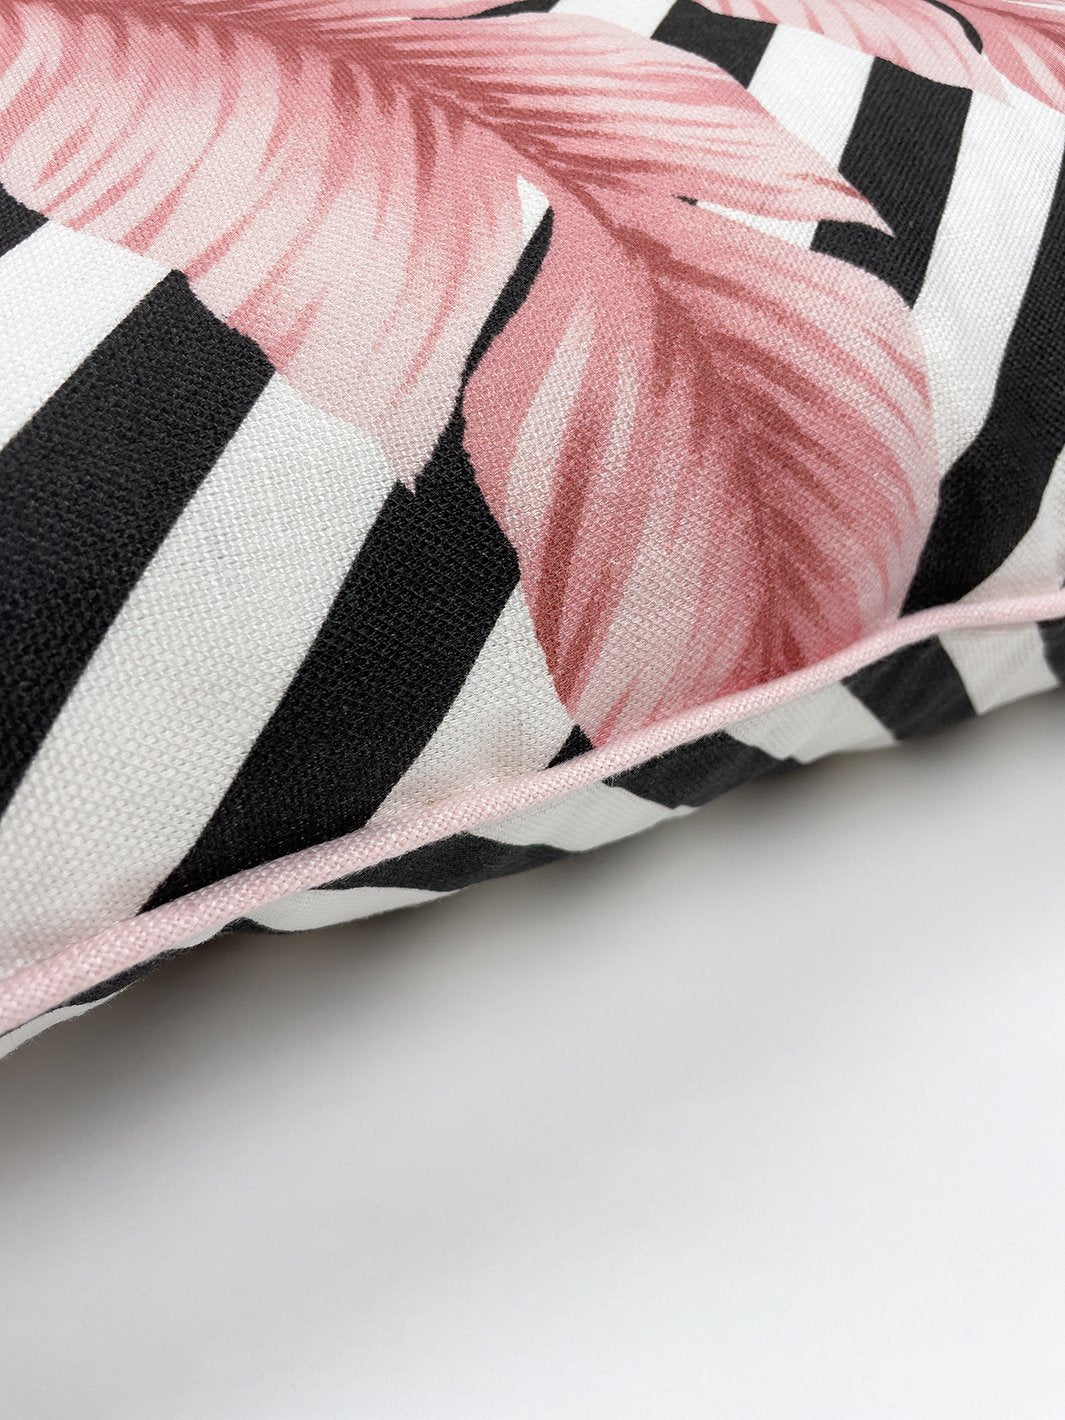 'Barbiestyle™ Isla Palm' Throw Pillow - Flamingo